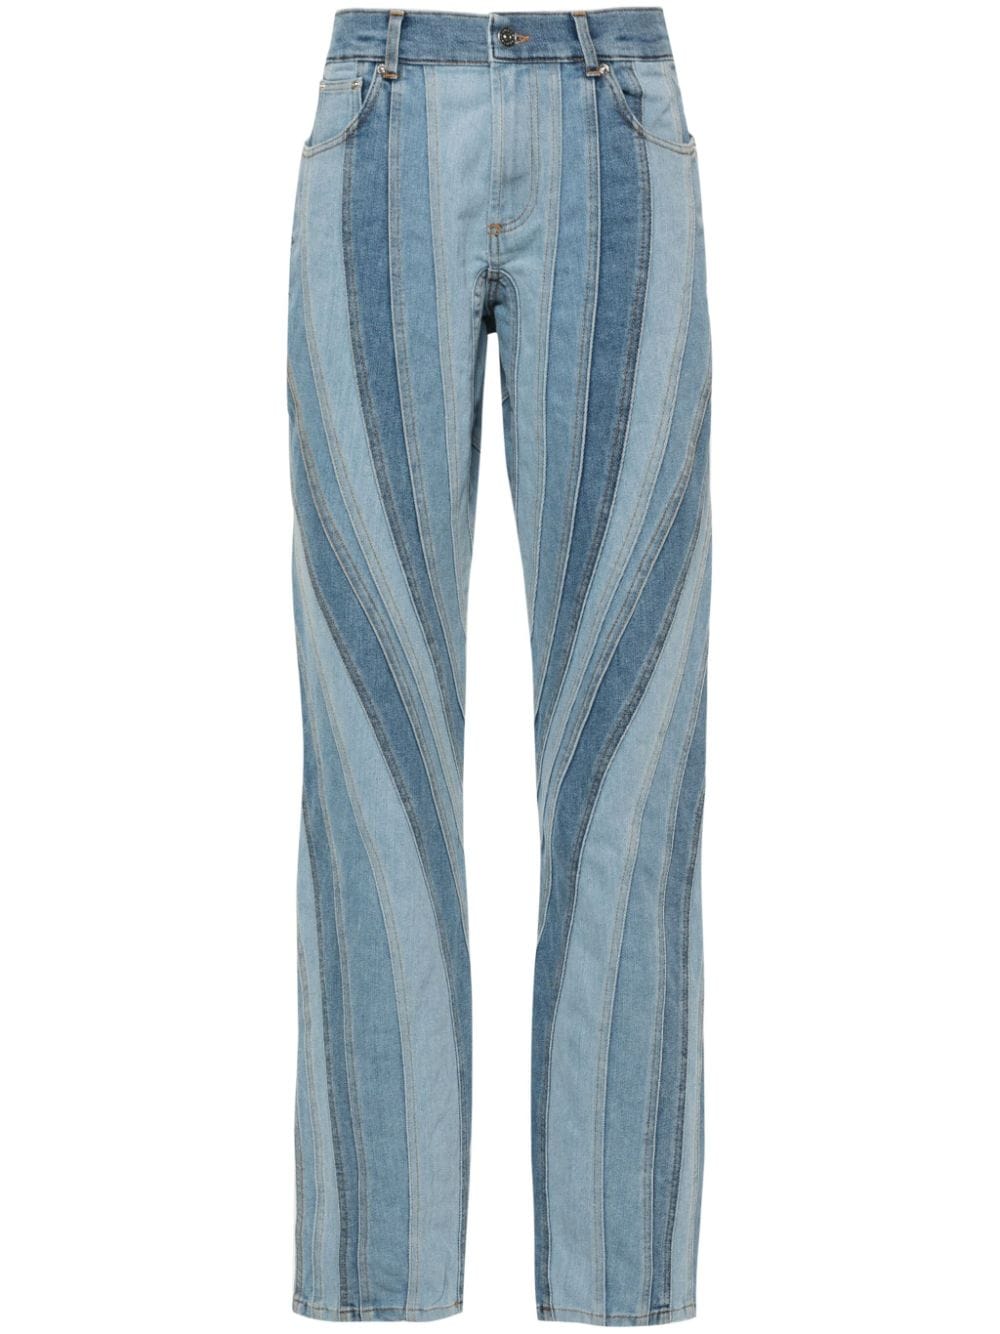 Spiral straight-leg jeans